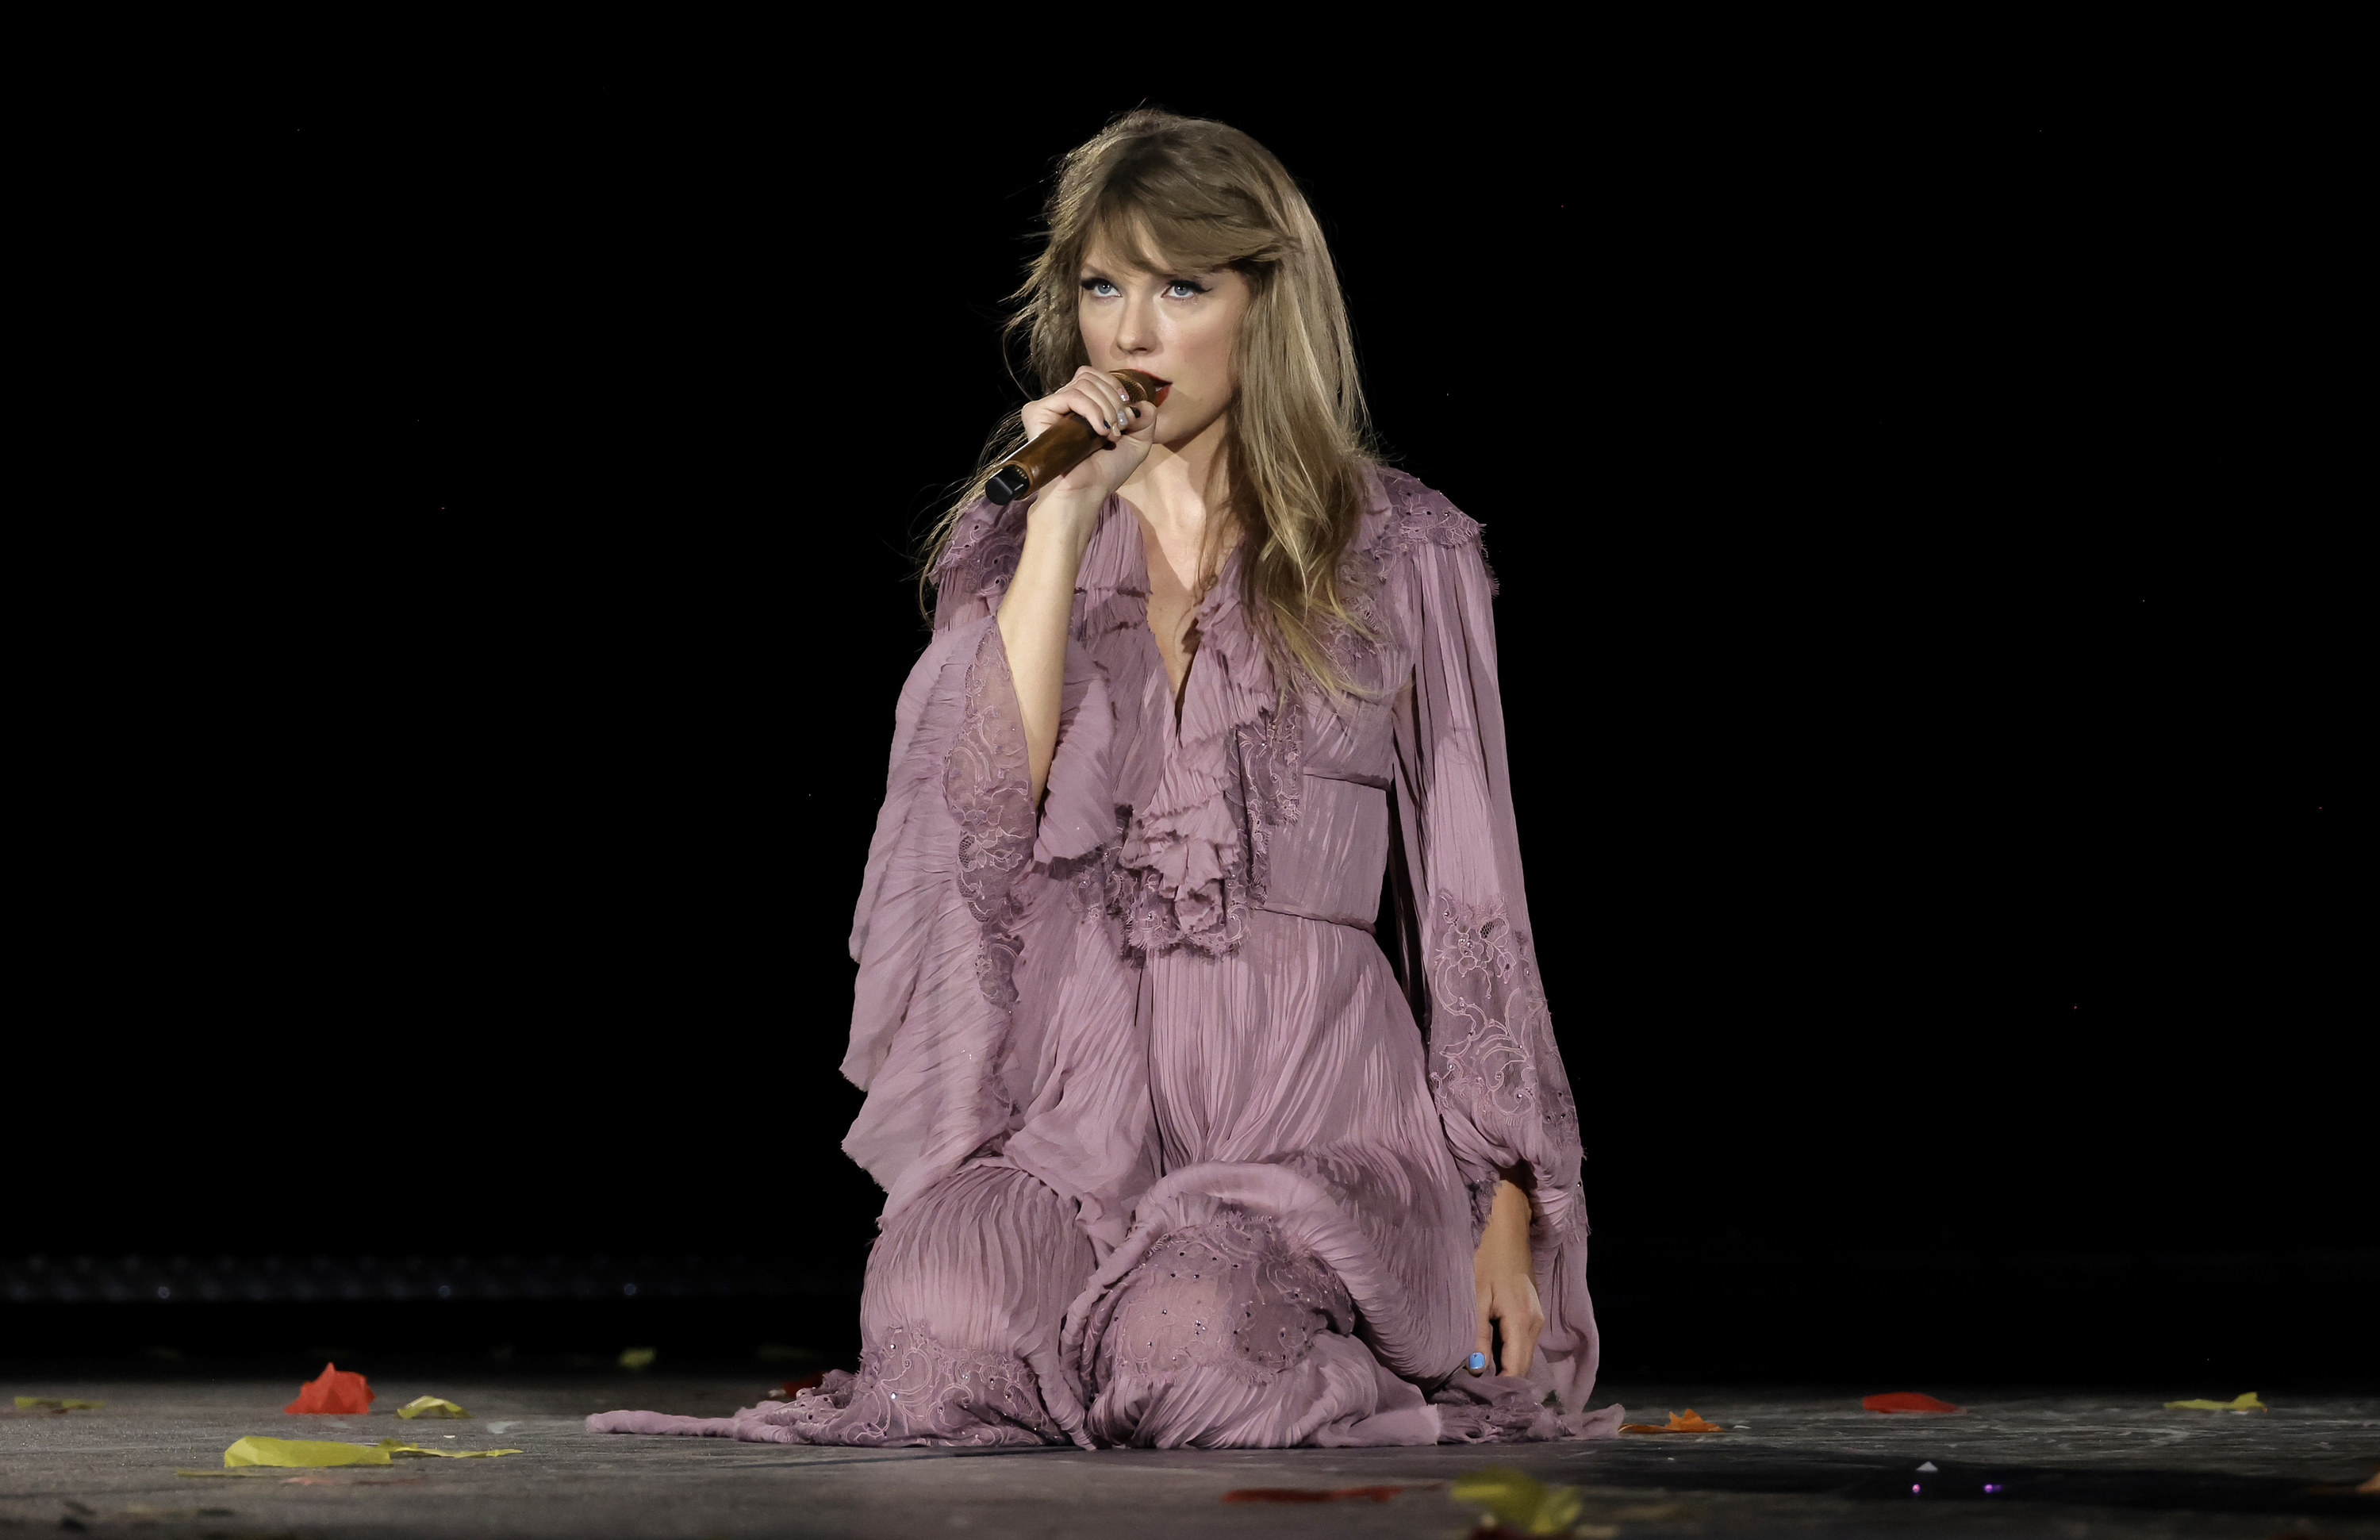 Taylor on her knees singing onstage